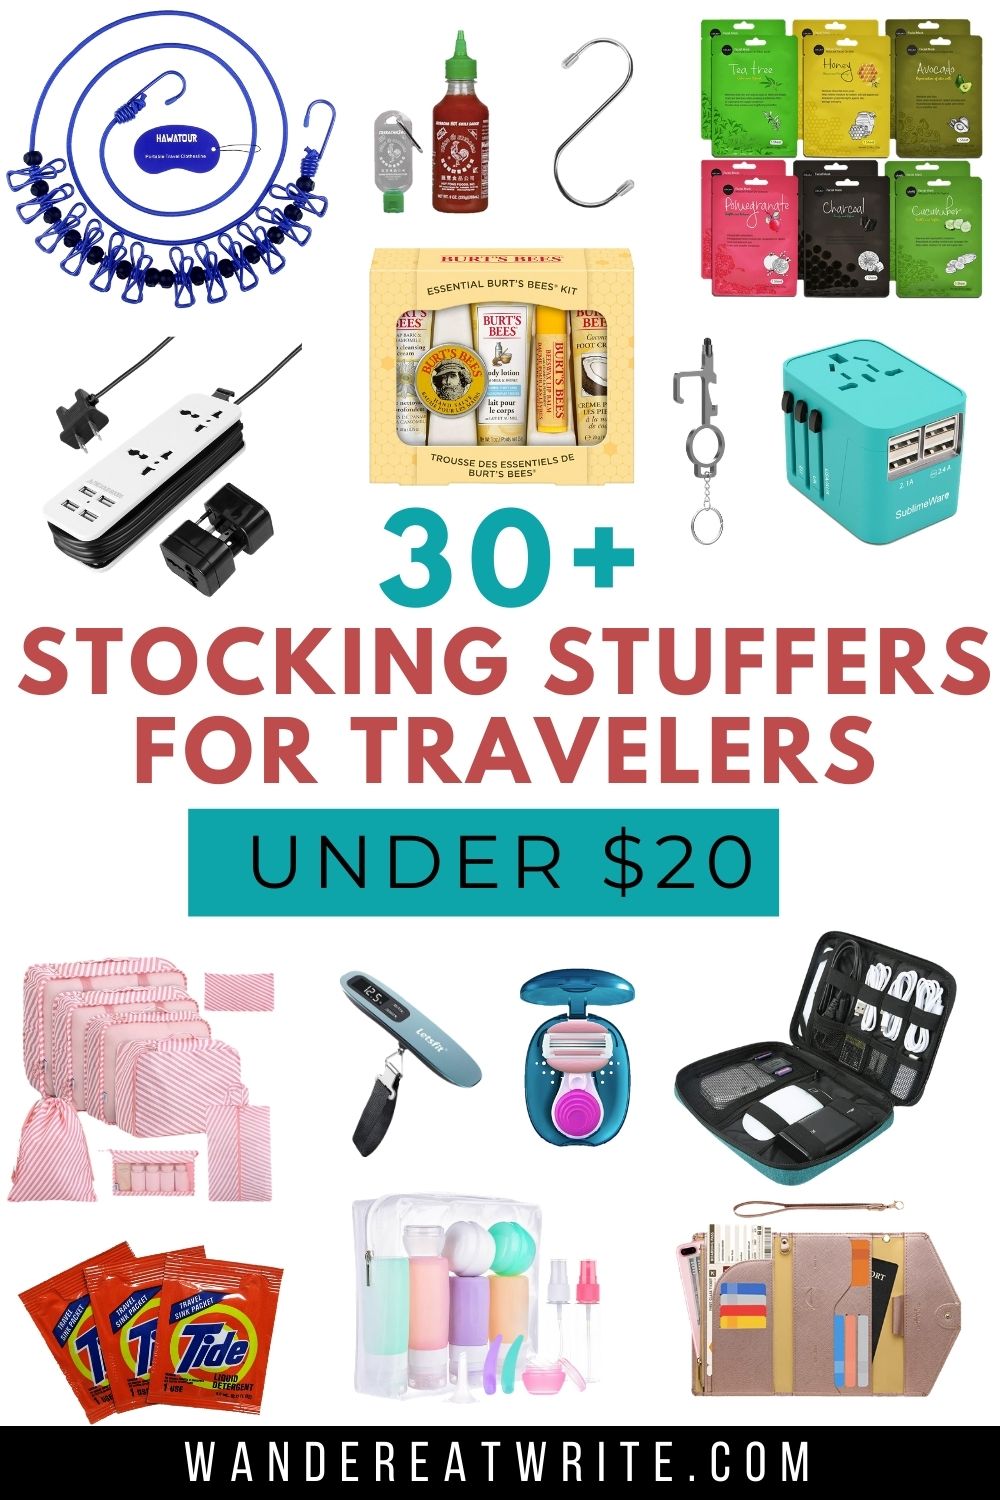 https://wandereatwrite.com/usheeche/2020/12/useful-stocking-stuffers-for-travelers-under-20-1.jpg